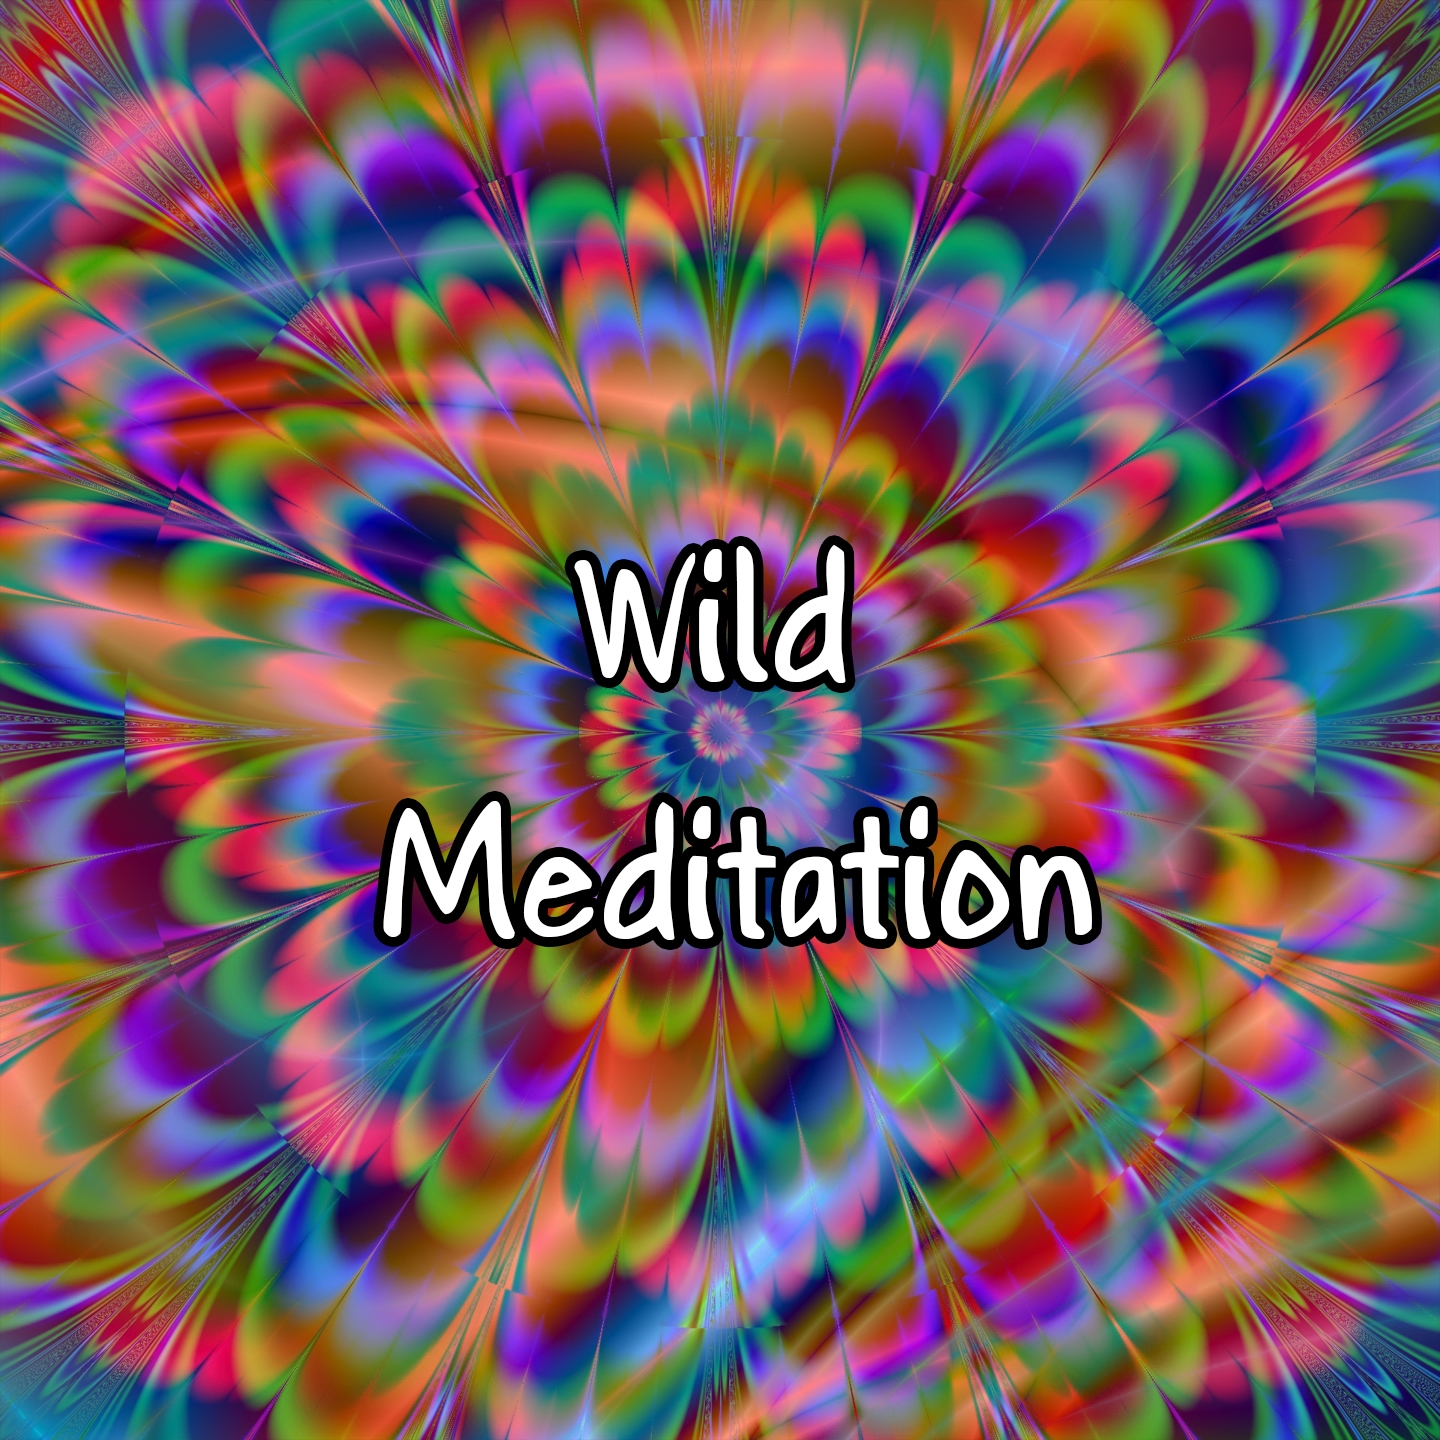 Wild Meditation